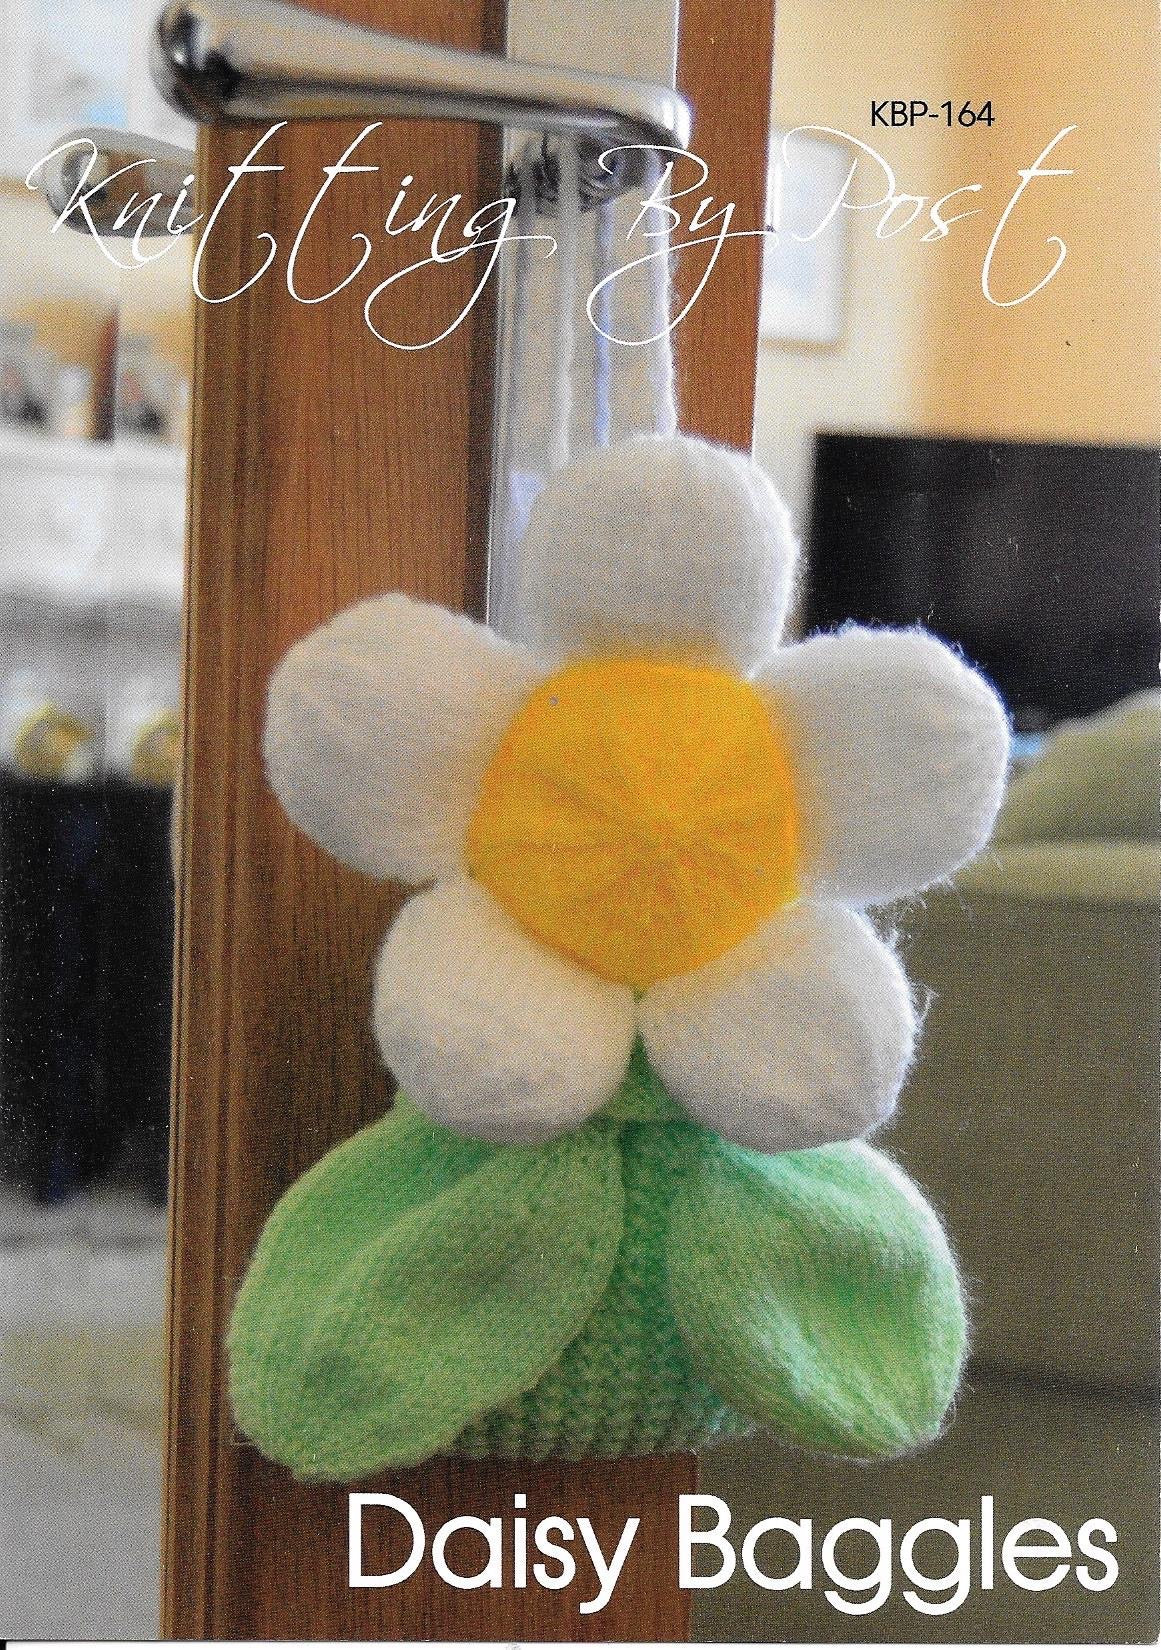 164 KBP164 Daisy Baggles toy in Dk knitting pattern